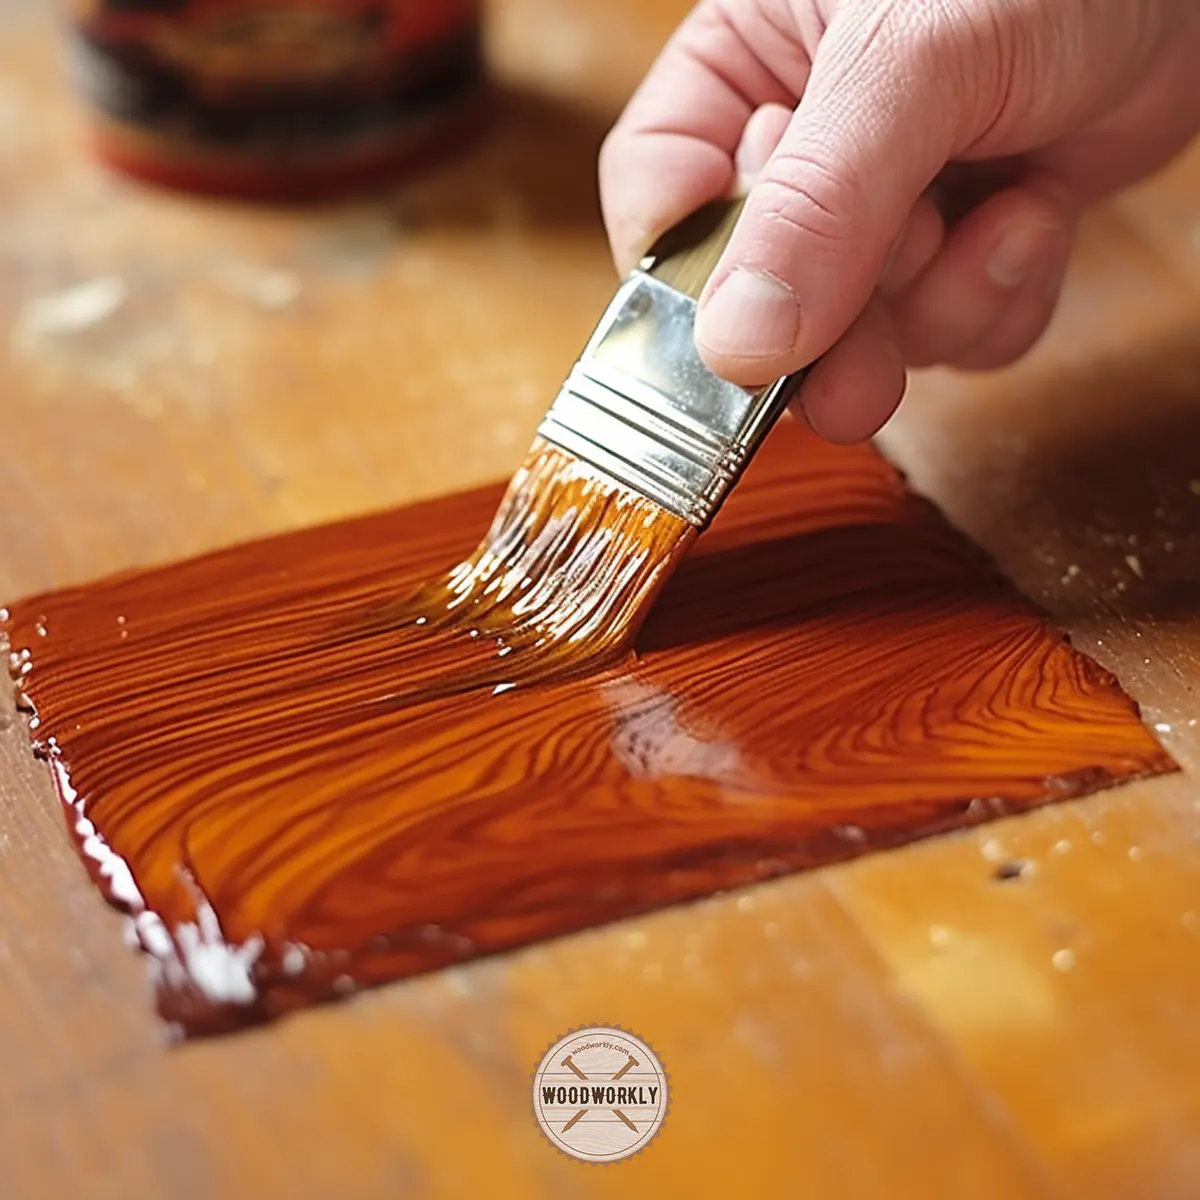 applying varnish on wood surface